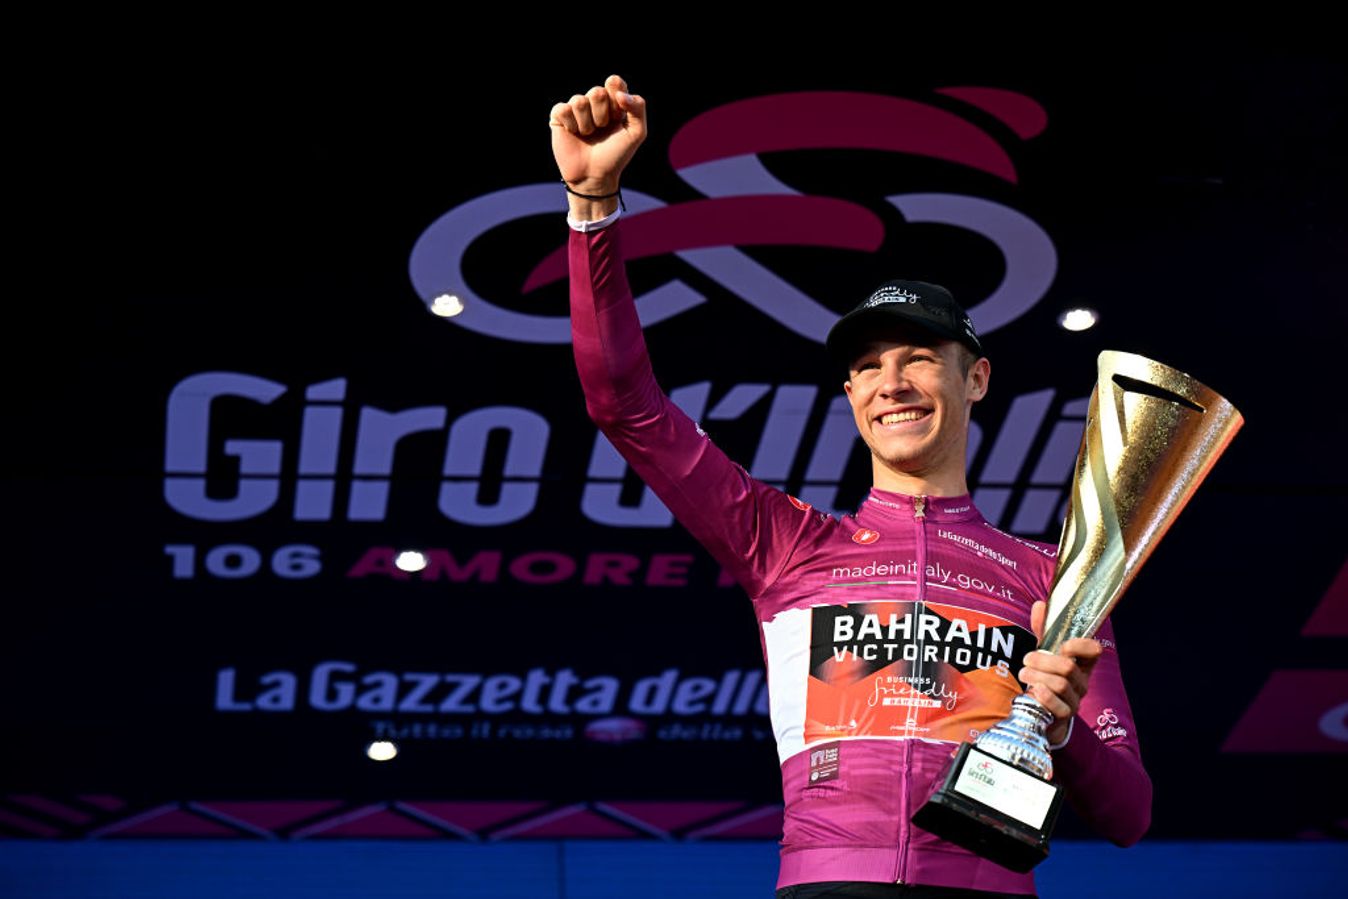 Jonathan Milan returns to the Giro d'Italia as the defending points classification winner